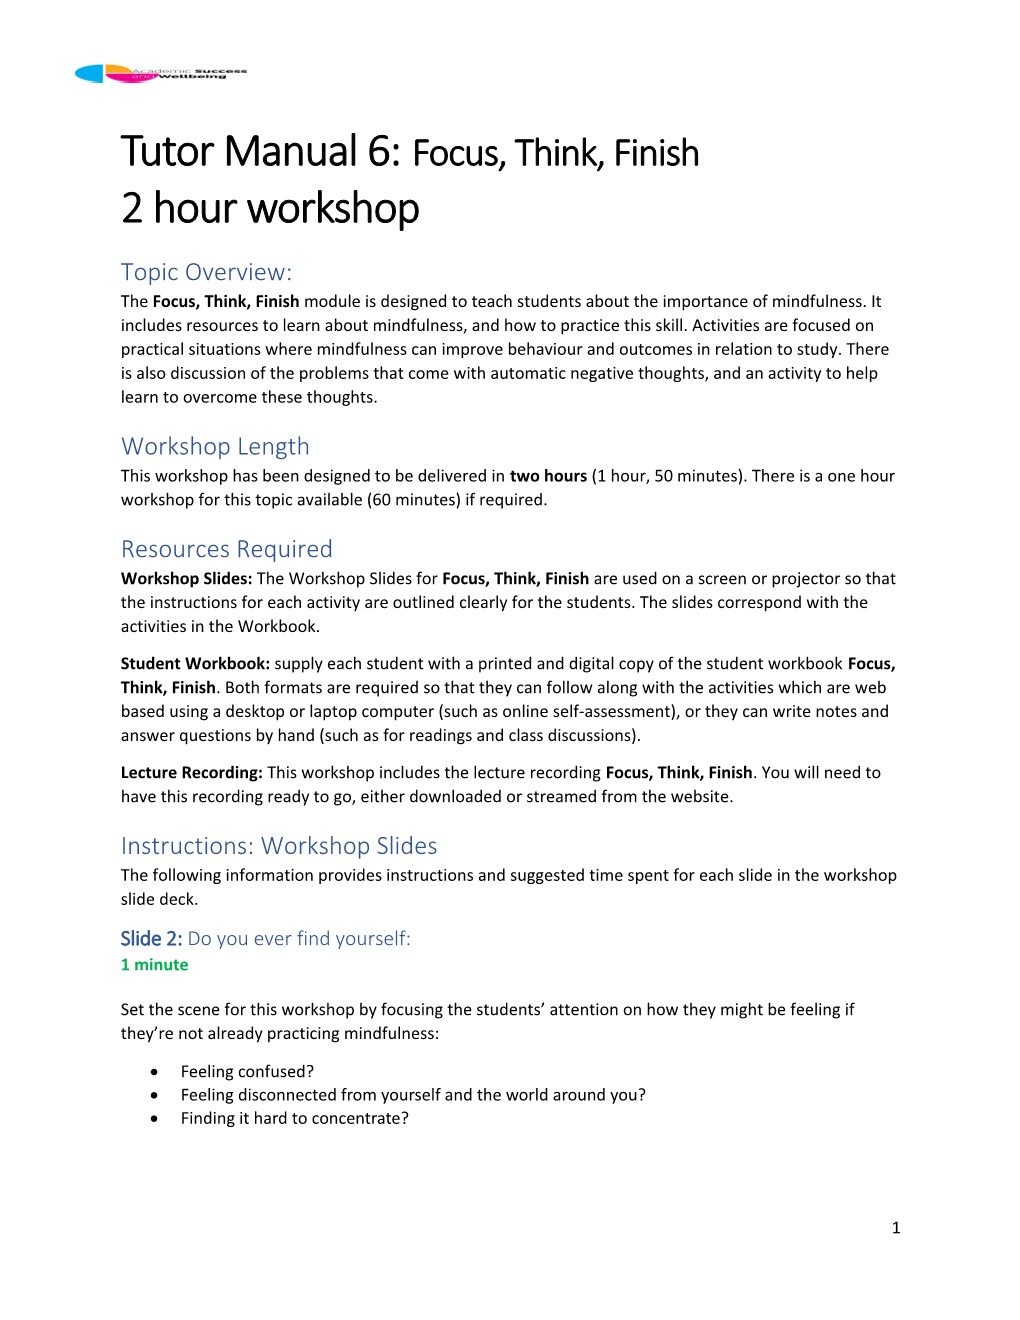 Tutor Manual 6:Focus, Think, Finish 2 Hour Workshop